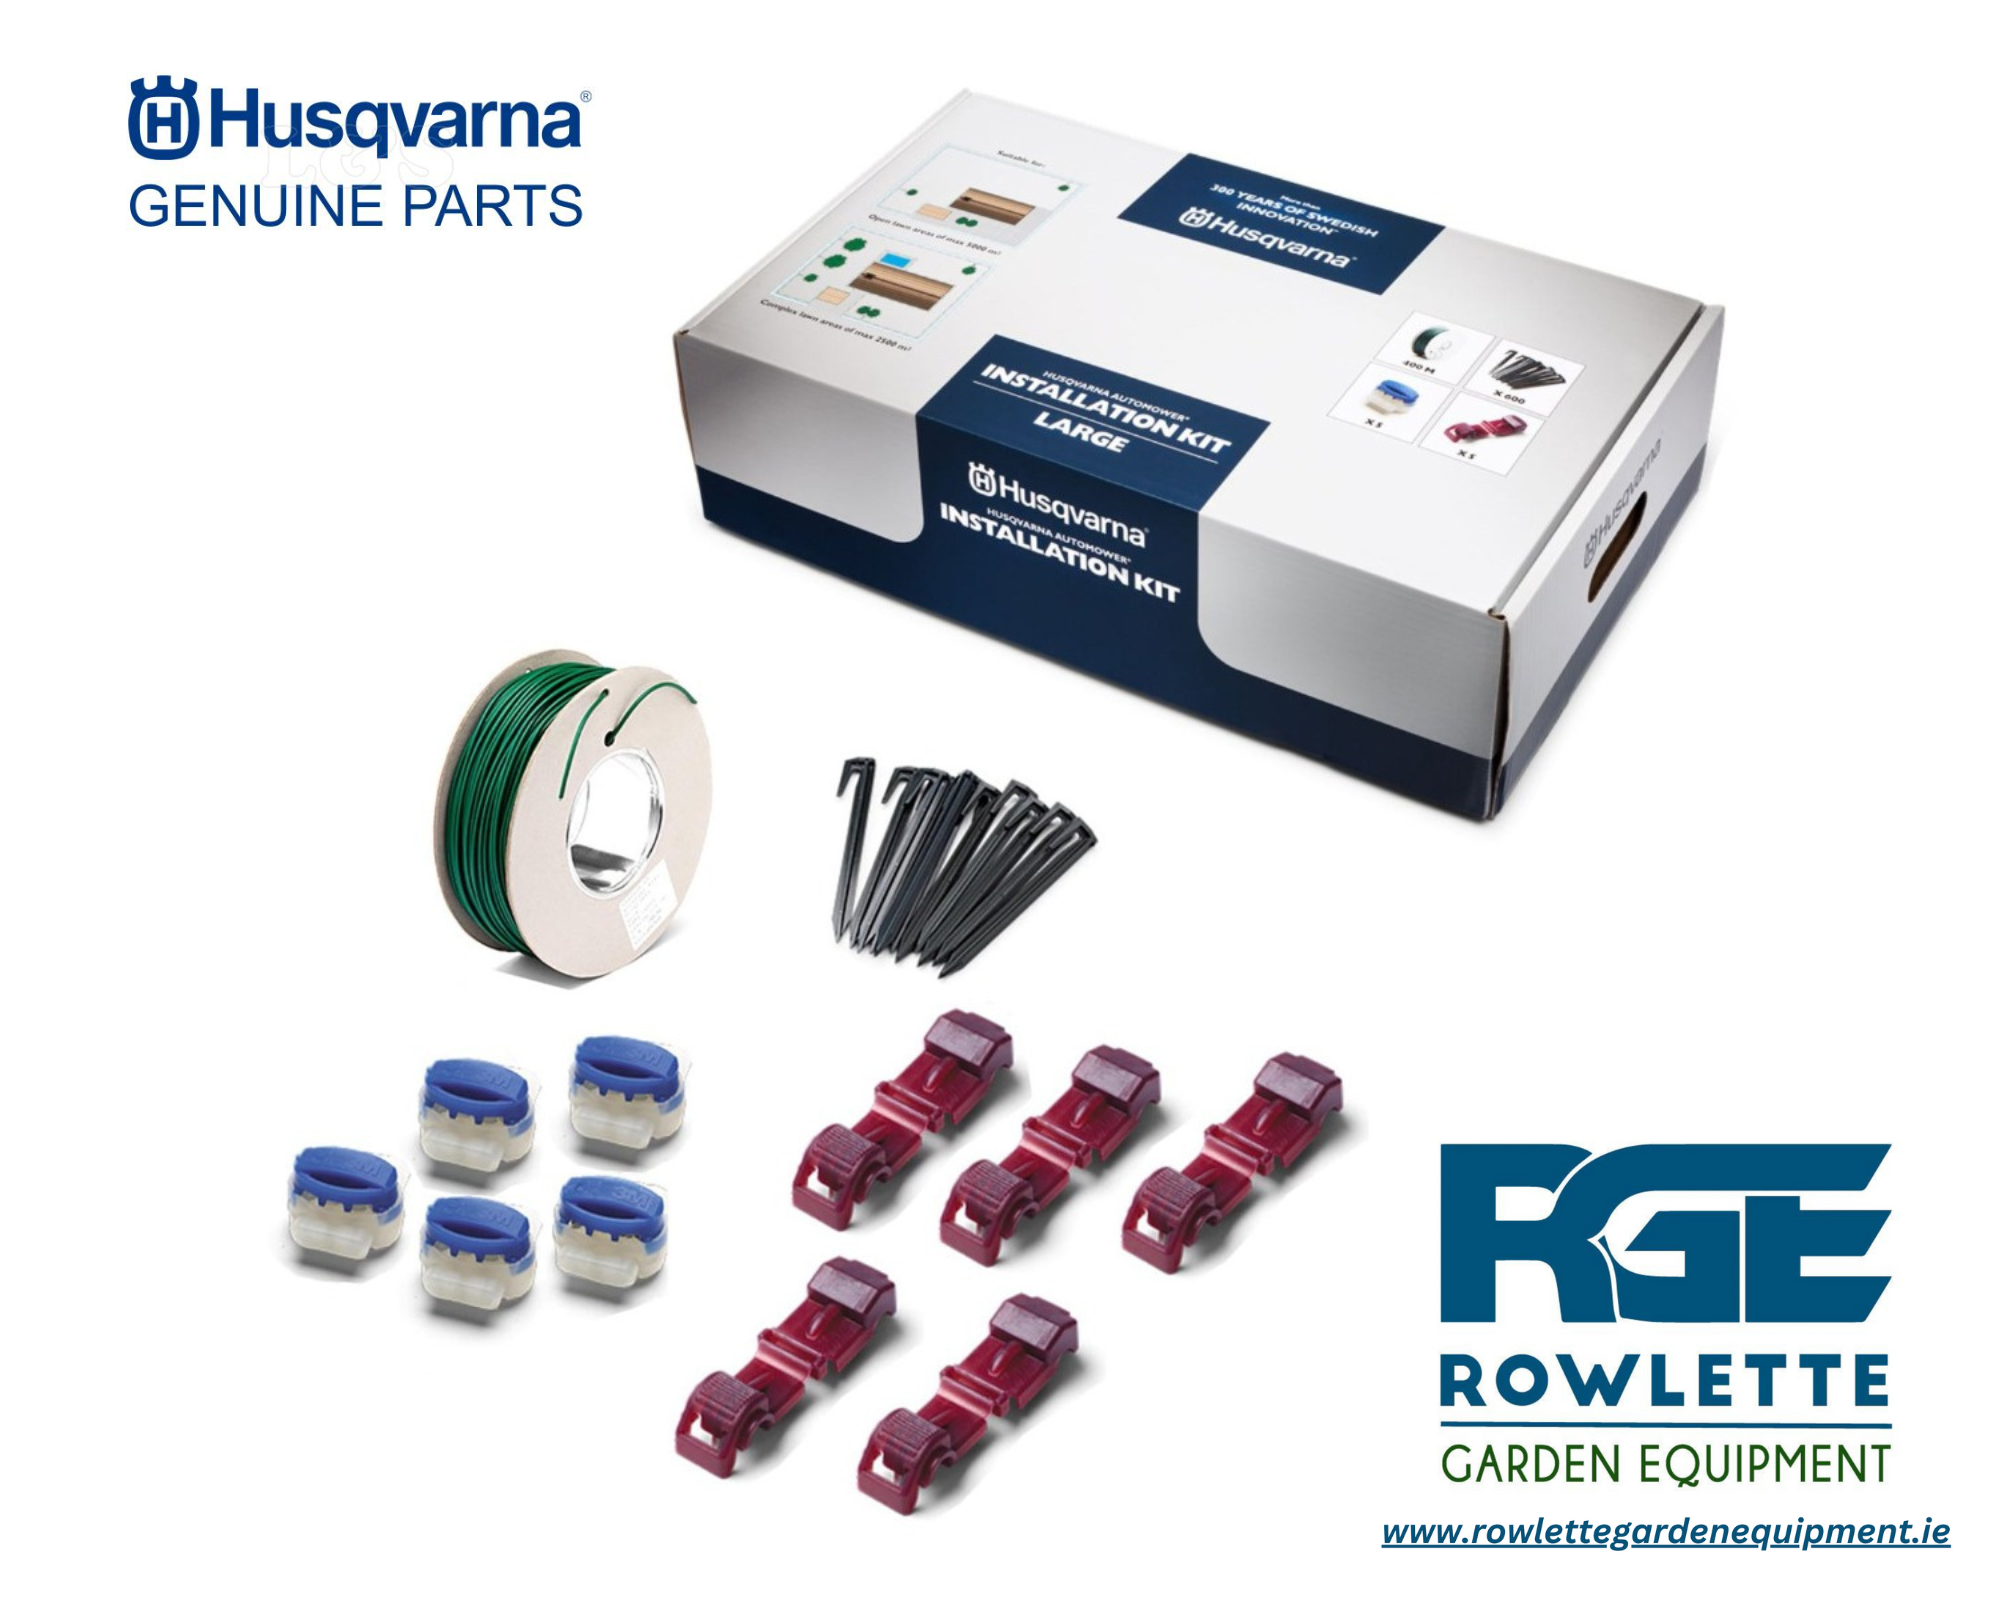 Husqvarna Automower installation kit large